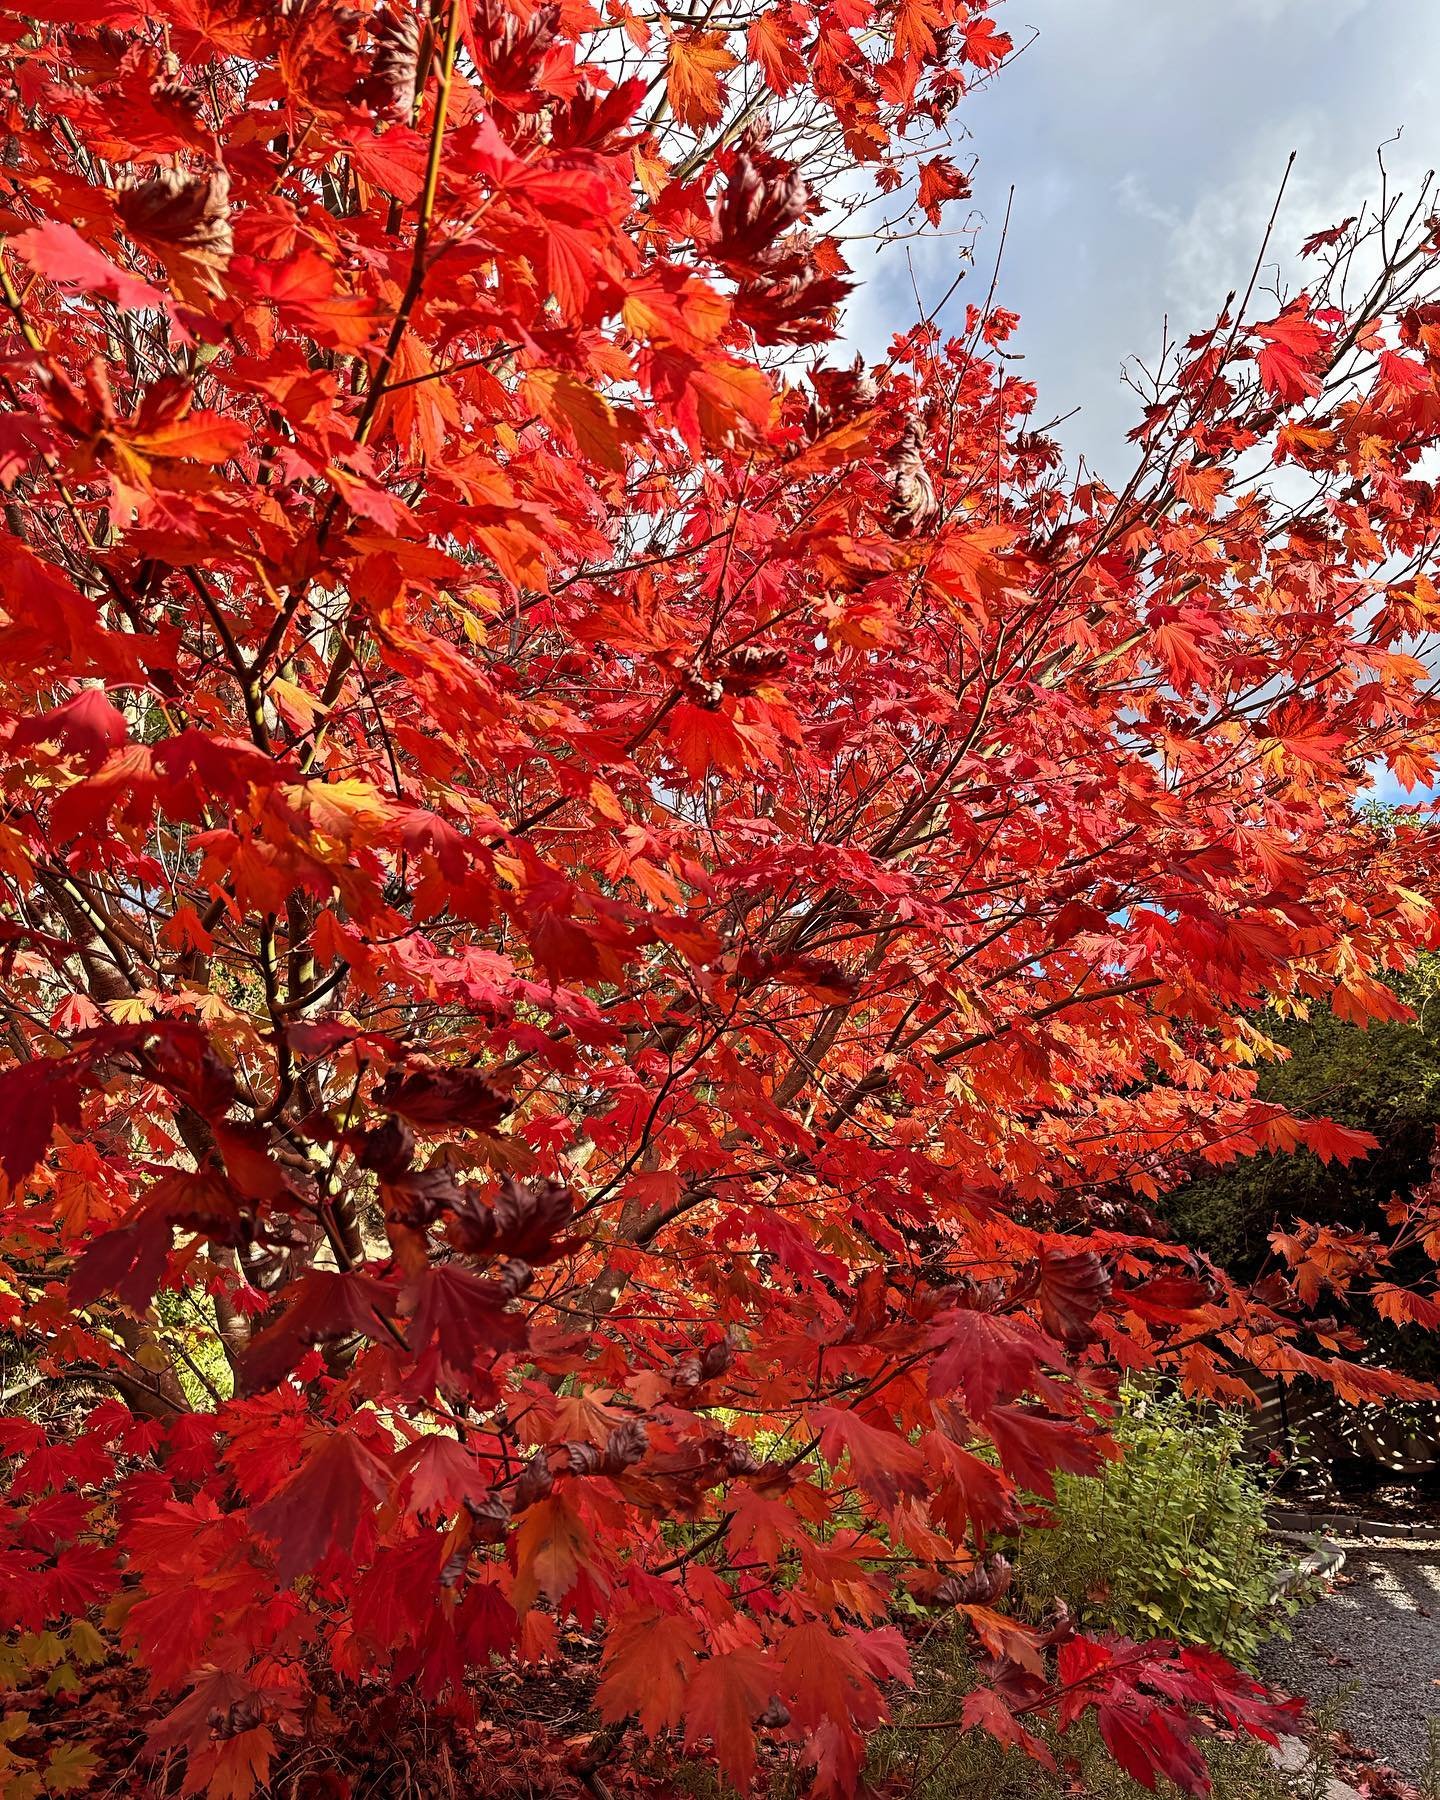 It&rsquo;s been a great season for Autumn colour! #mannahillestate #autumn #autumncolors #autumnleaves